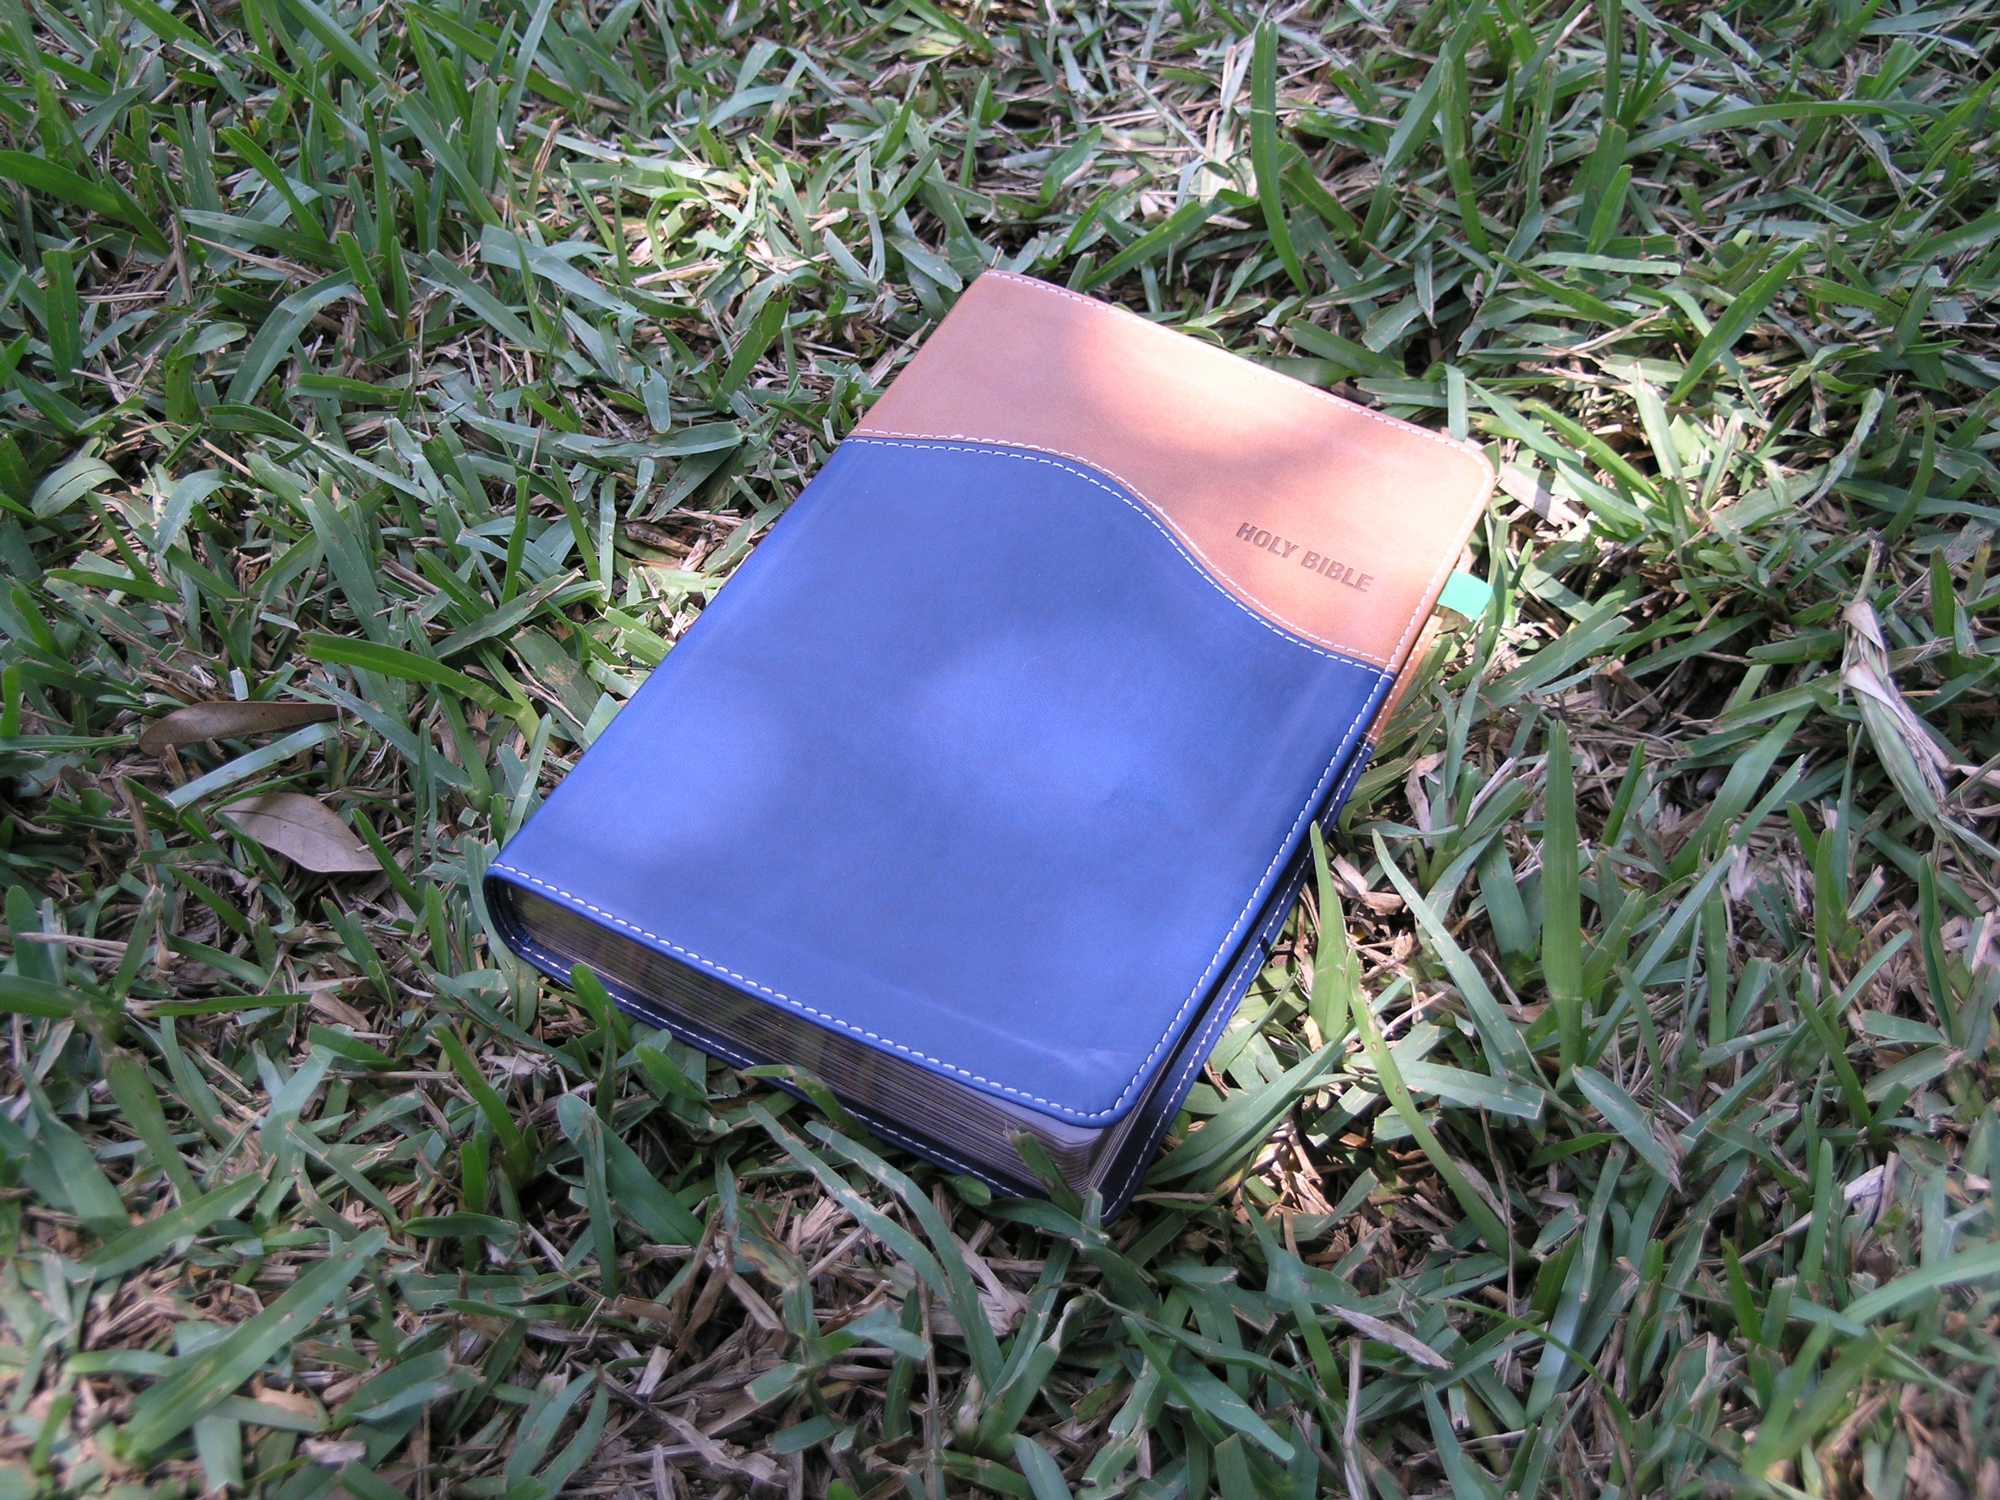 Bible on lawn